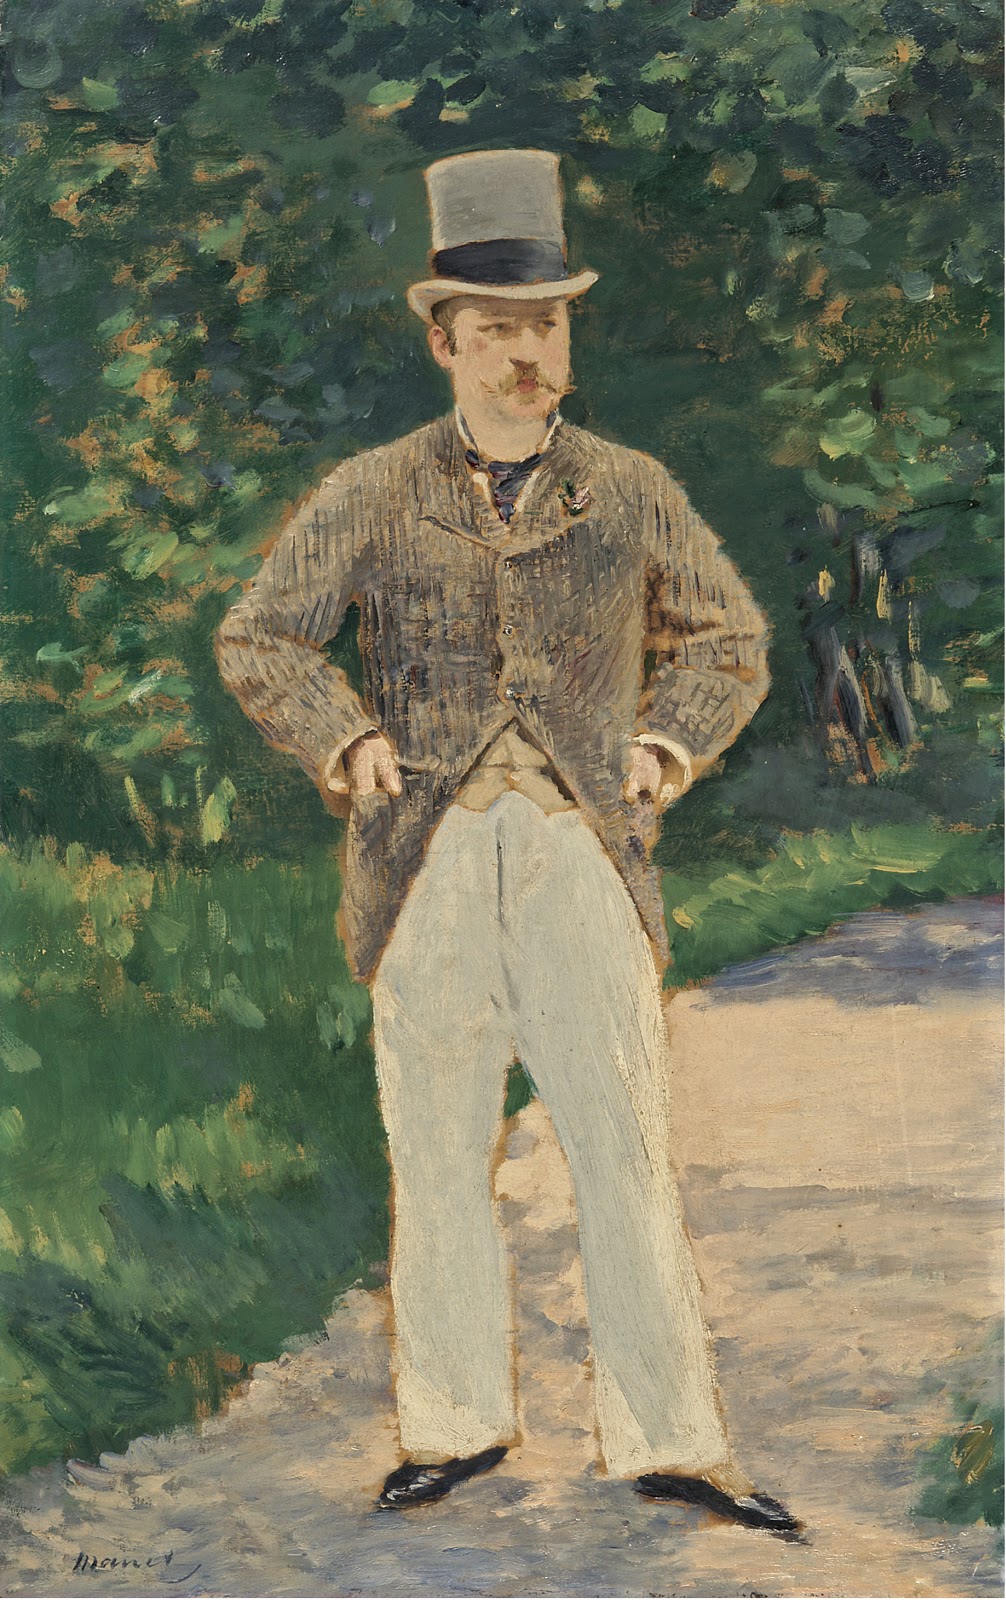 Edouard+Manet-1832-1883 (146).jpg